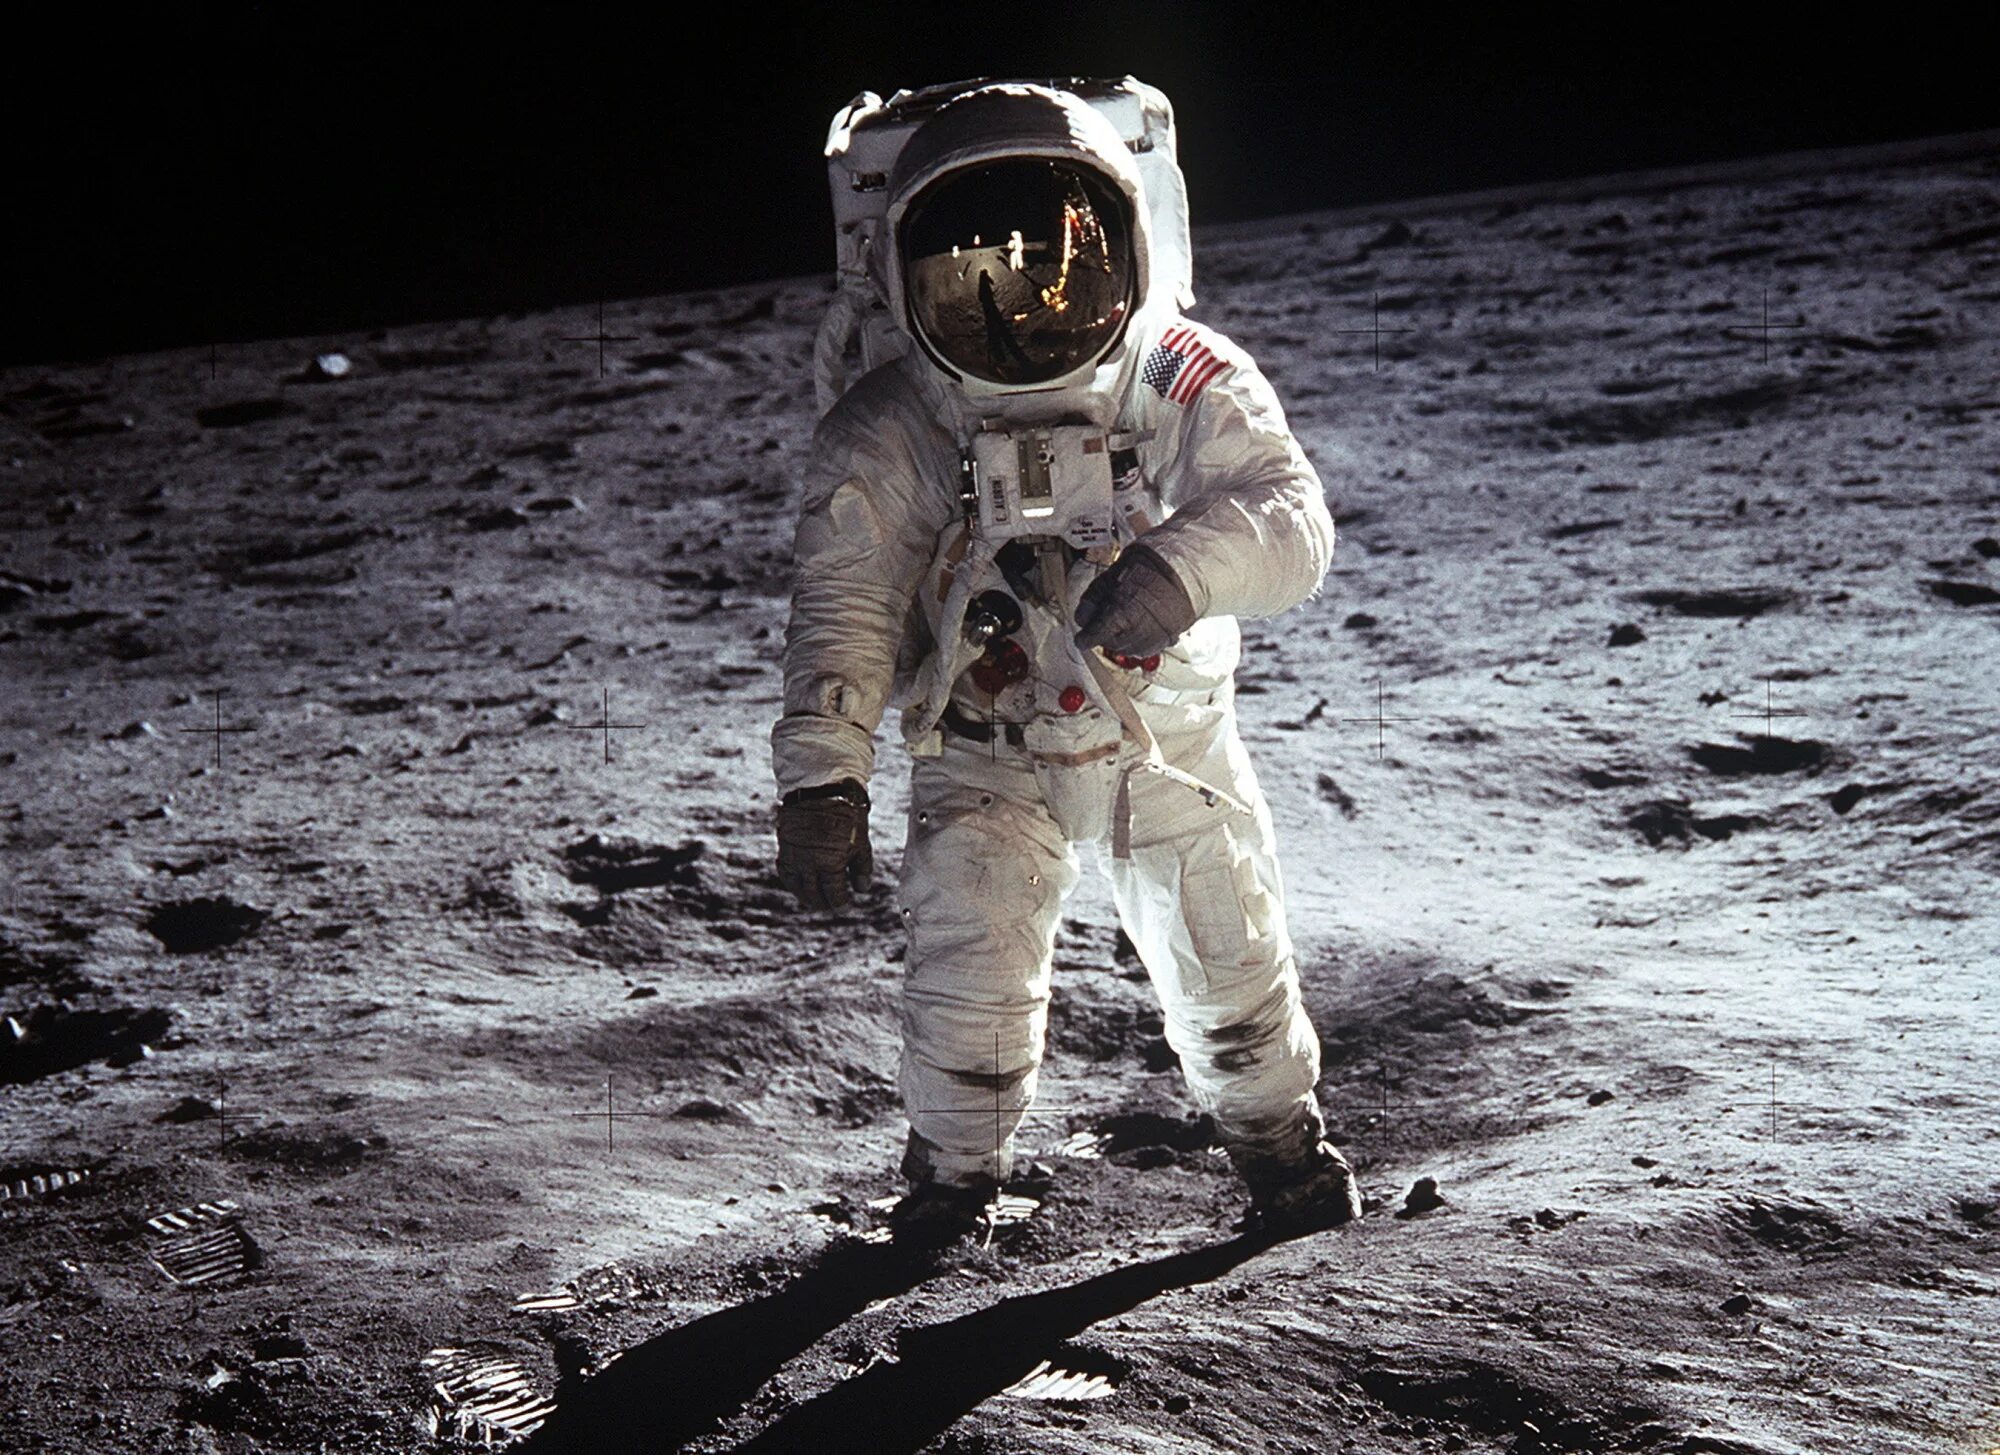 Аполлон 11. The astronauts on the moon